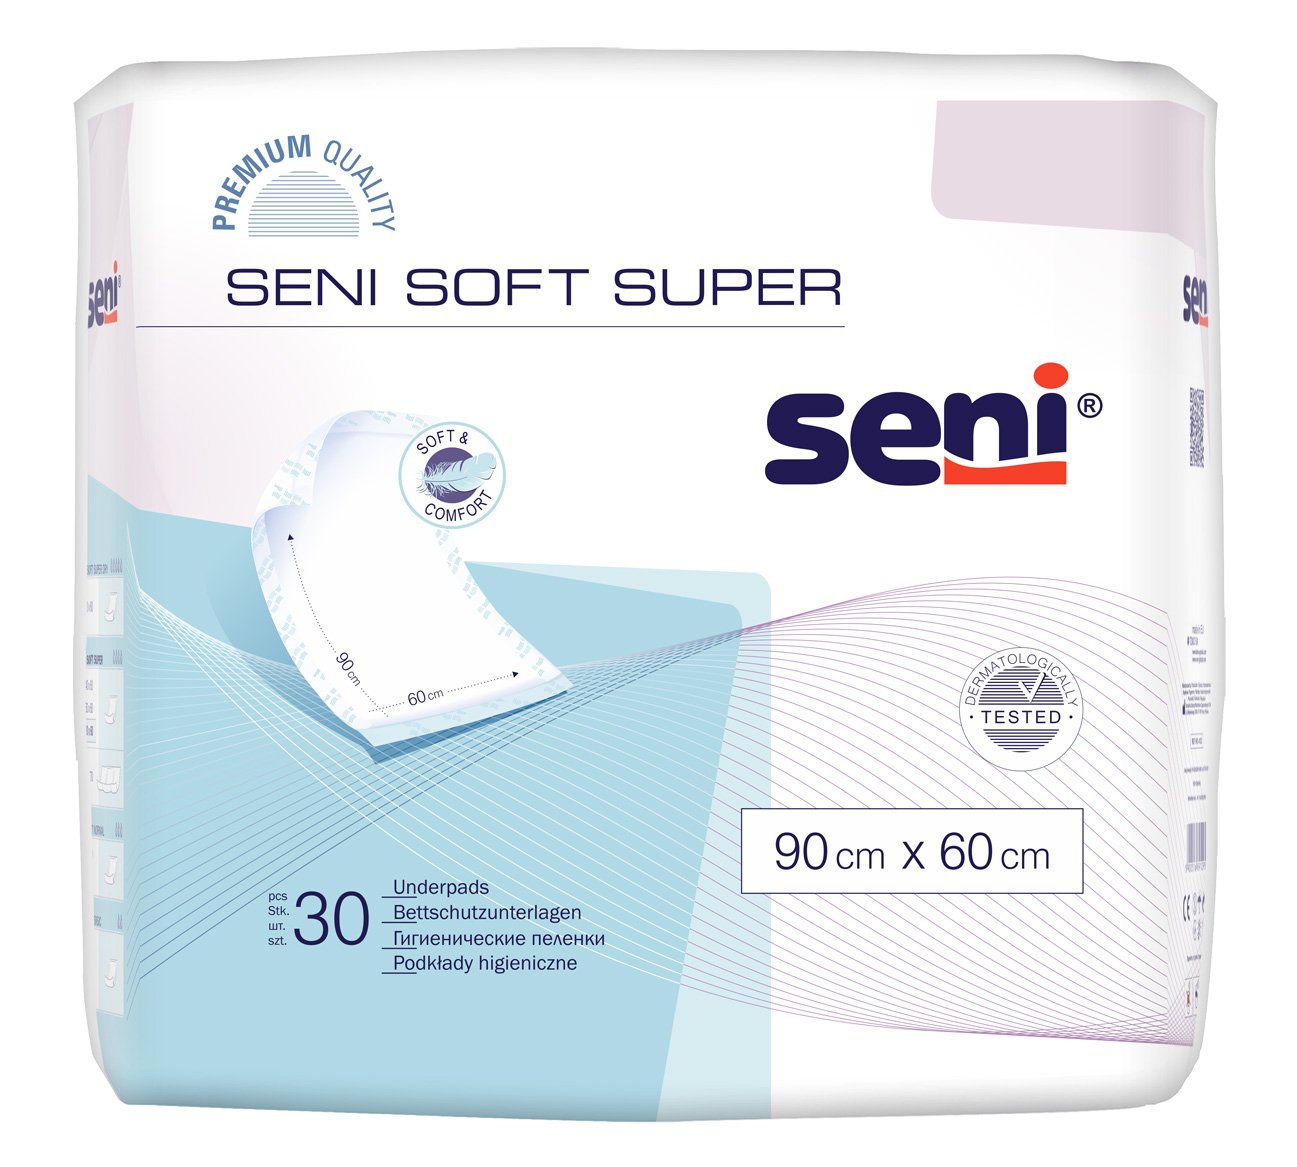 Seni Soft Super, 90 x 60 cm, Bettschutzunterlagen,120St